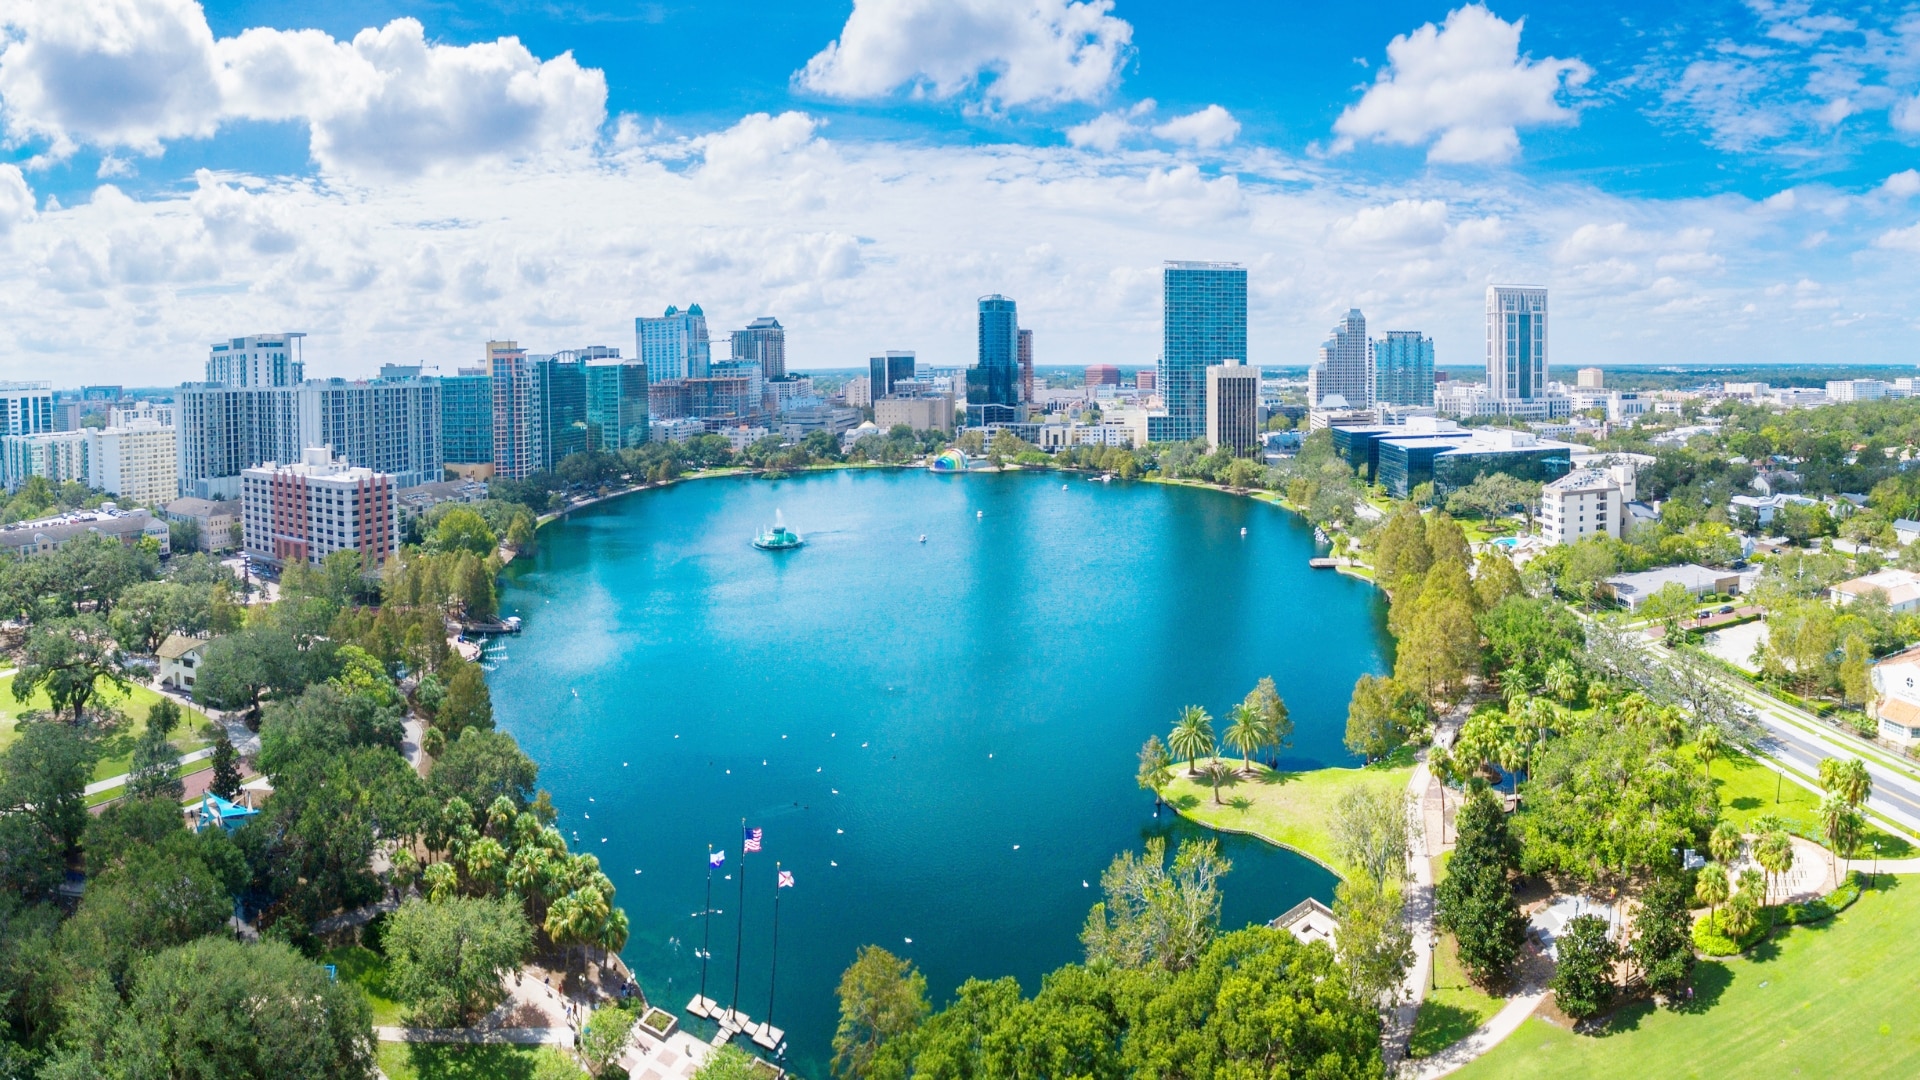 Aerial Image of Lake Eola - Fun Facts of Orlando